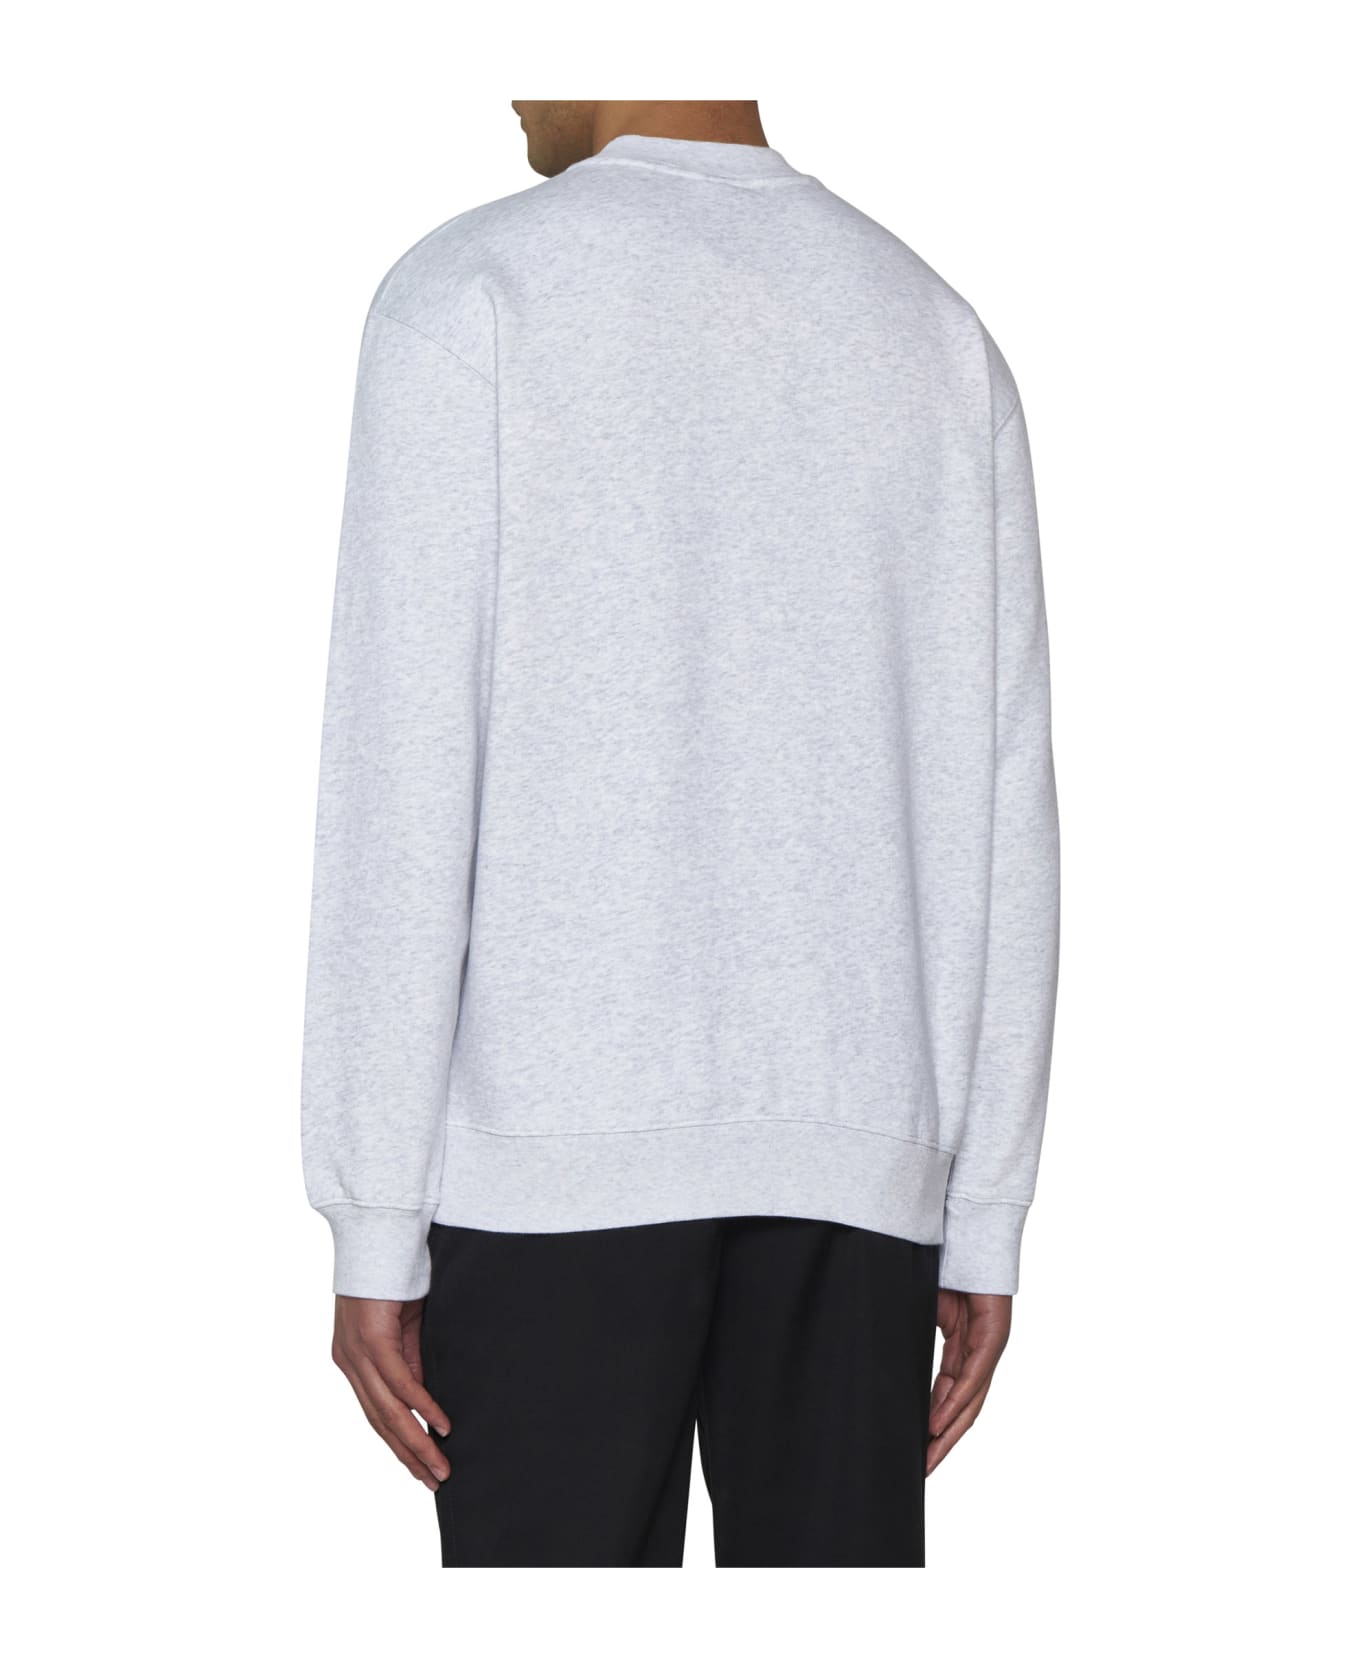 Jacquemus Gros Grain Cotton Sweatshirt - Grey フリース